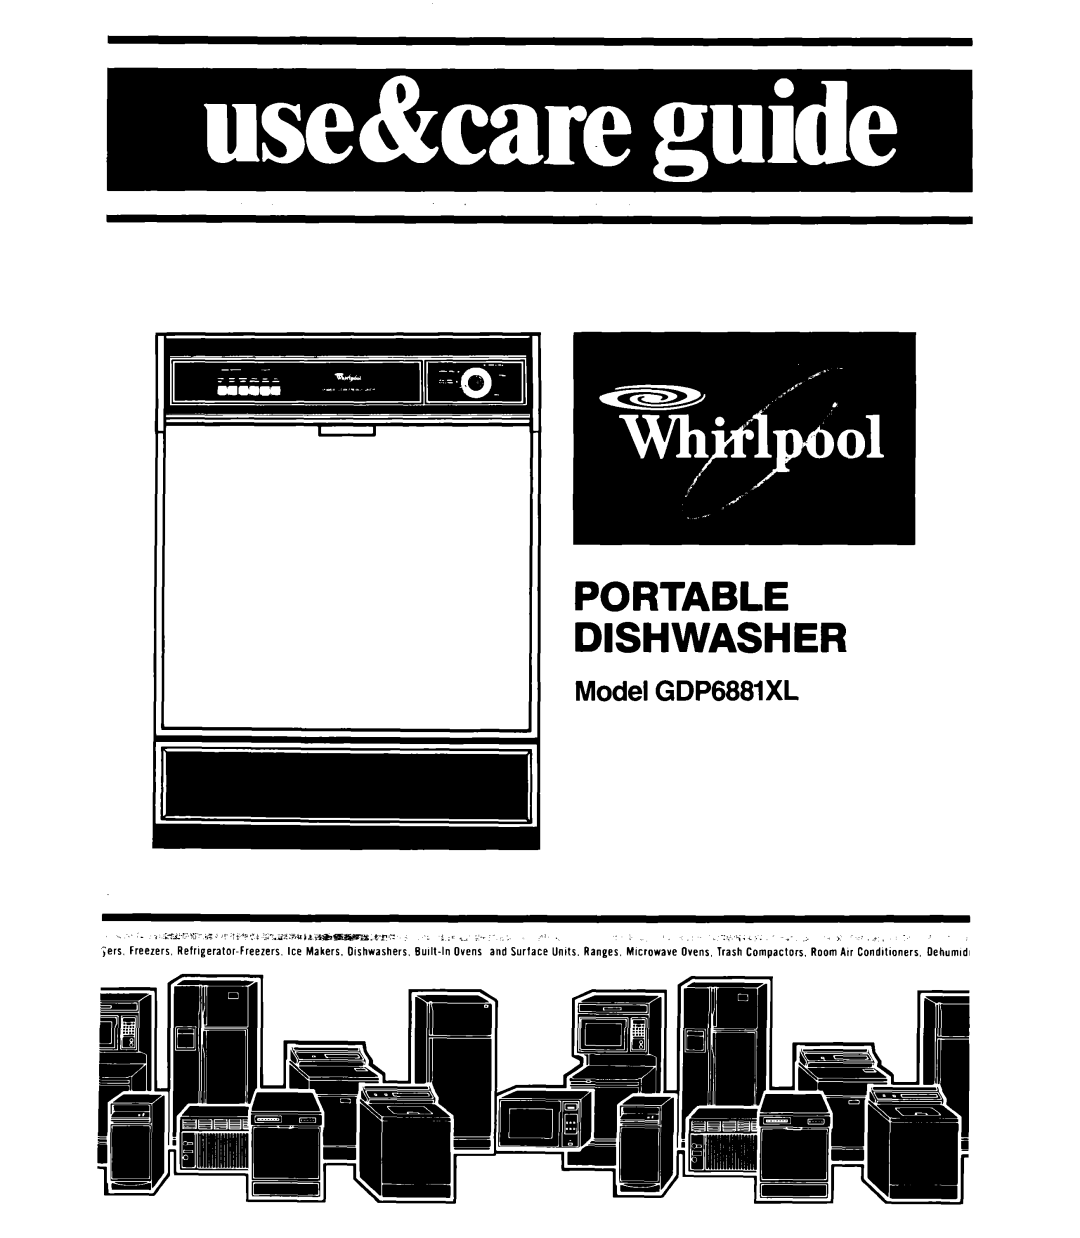 Whirlpool manual Portable Dishwasher, II Model GDP6881XL, Untts. Ranges 